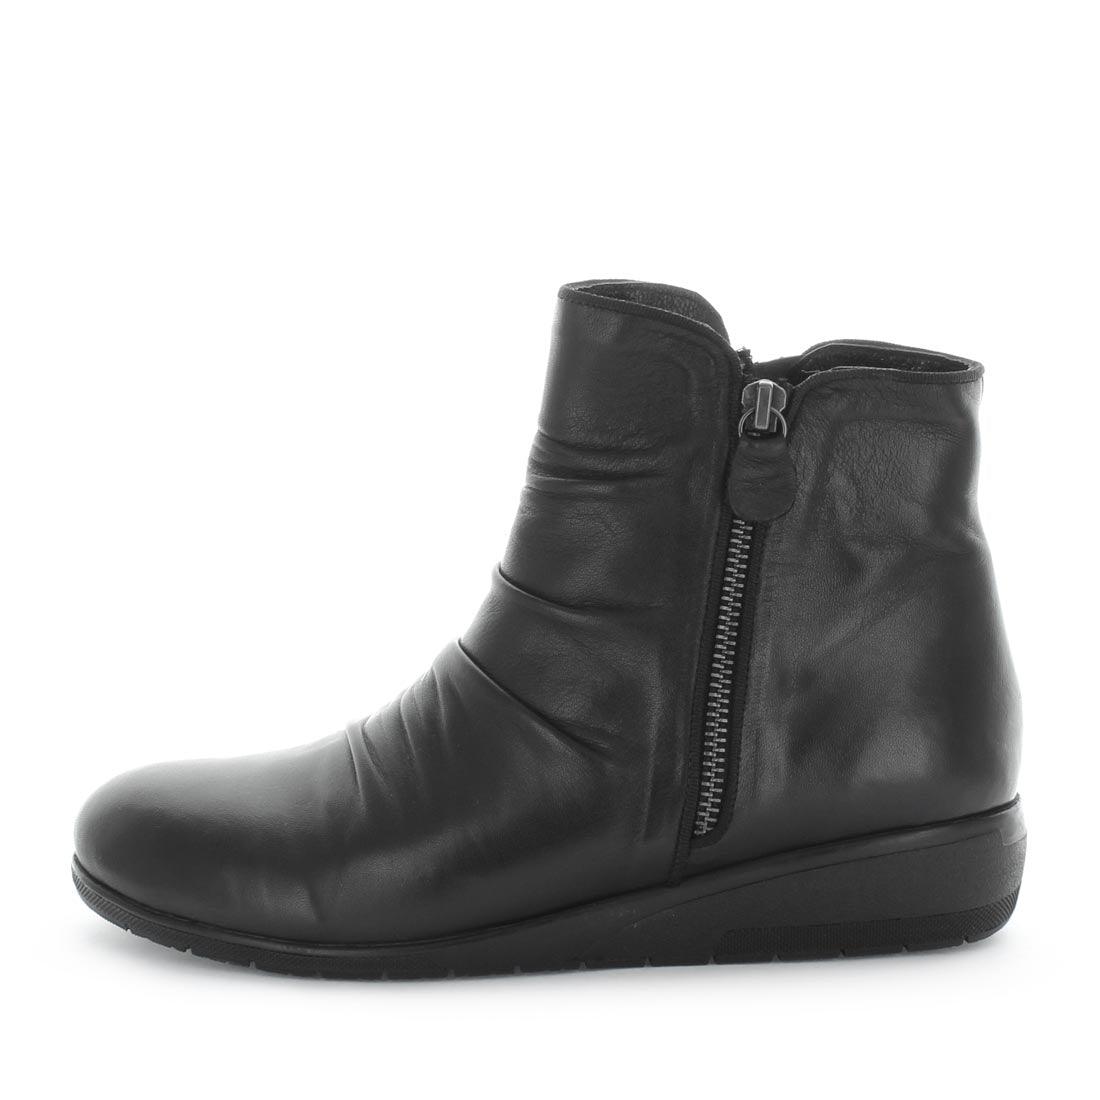 BOO by SOFT TREAD ALLINO - iShoes - NEW ARRIVALS, What's New, What's New: Women's New Arrivals, Women's Shoes, Women's Shoes: Boots, Women's Shoes: European - FOOTWEAR-FOOTWEAR